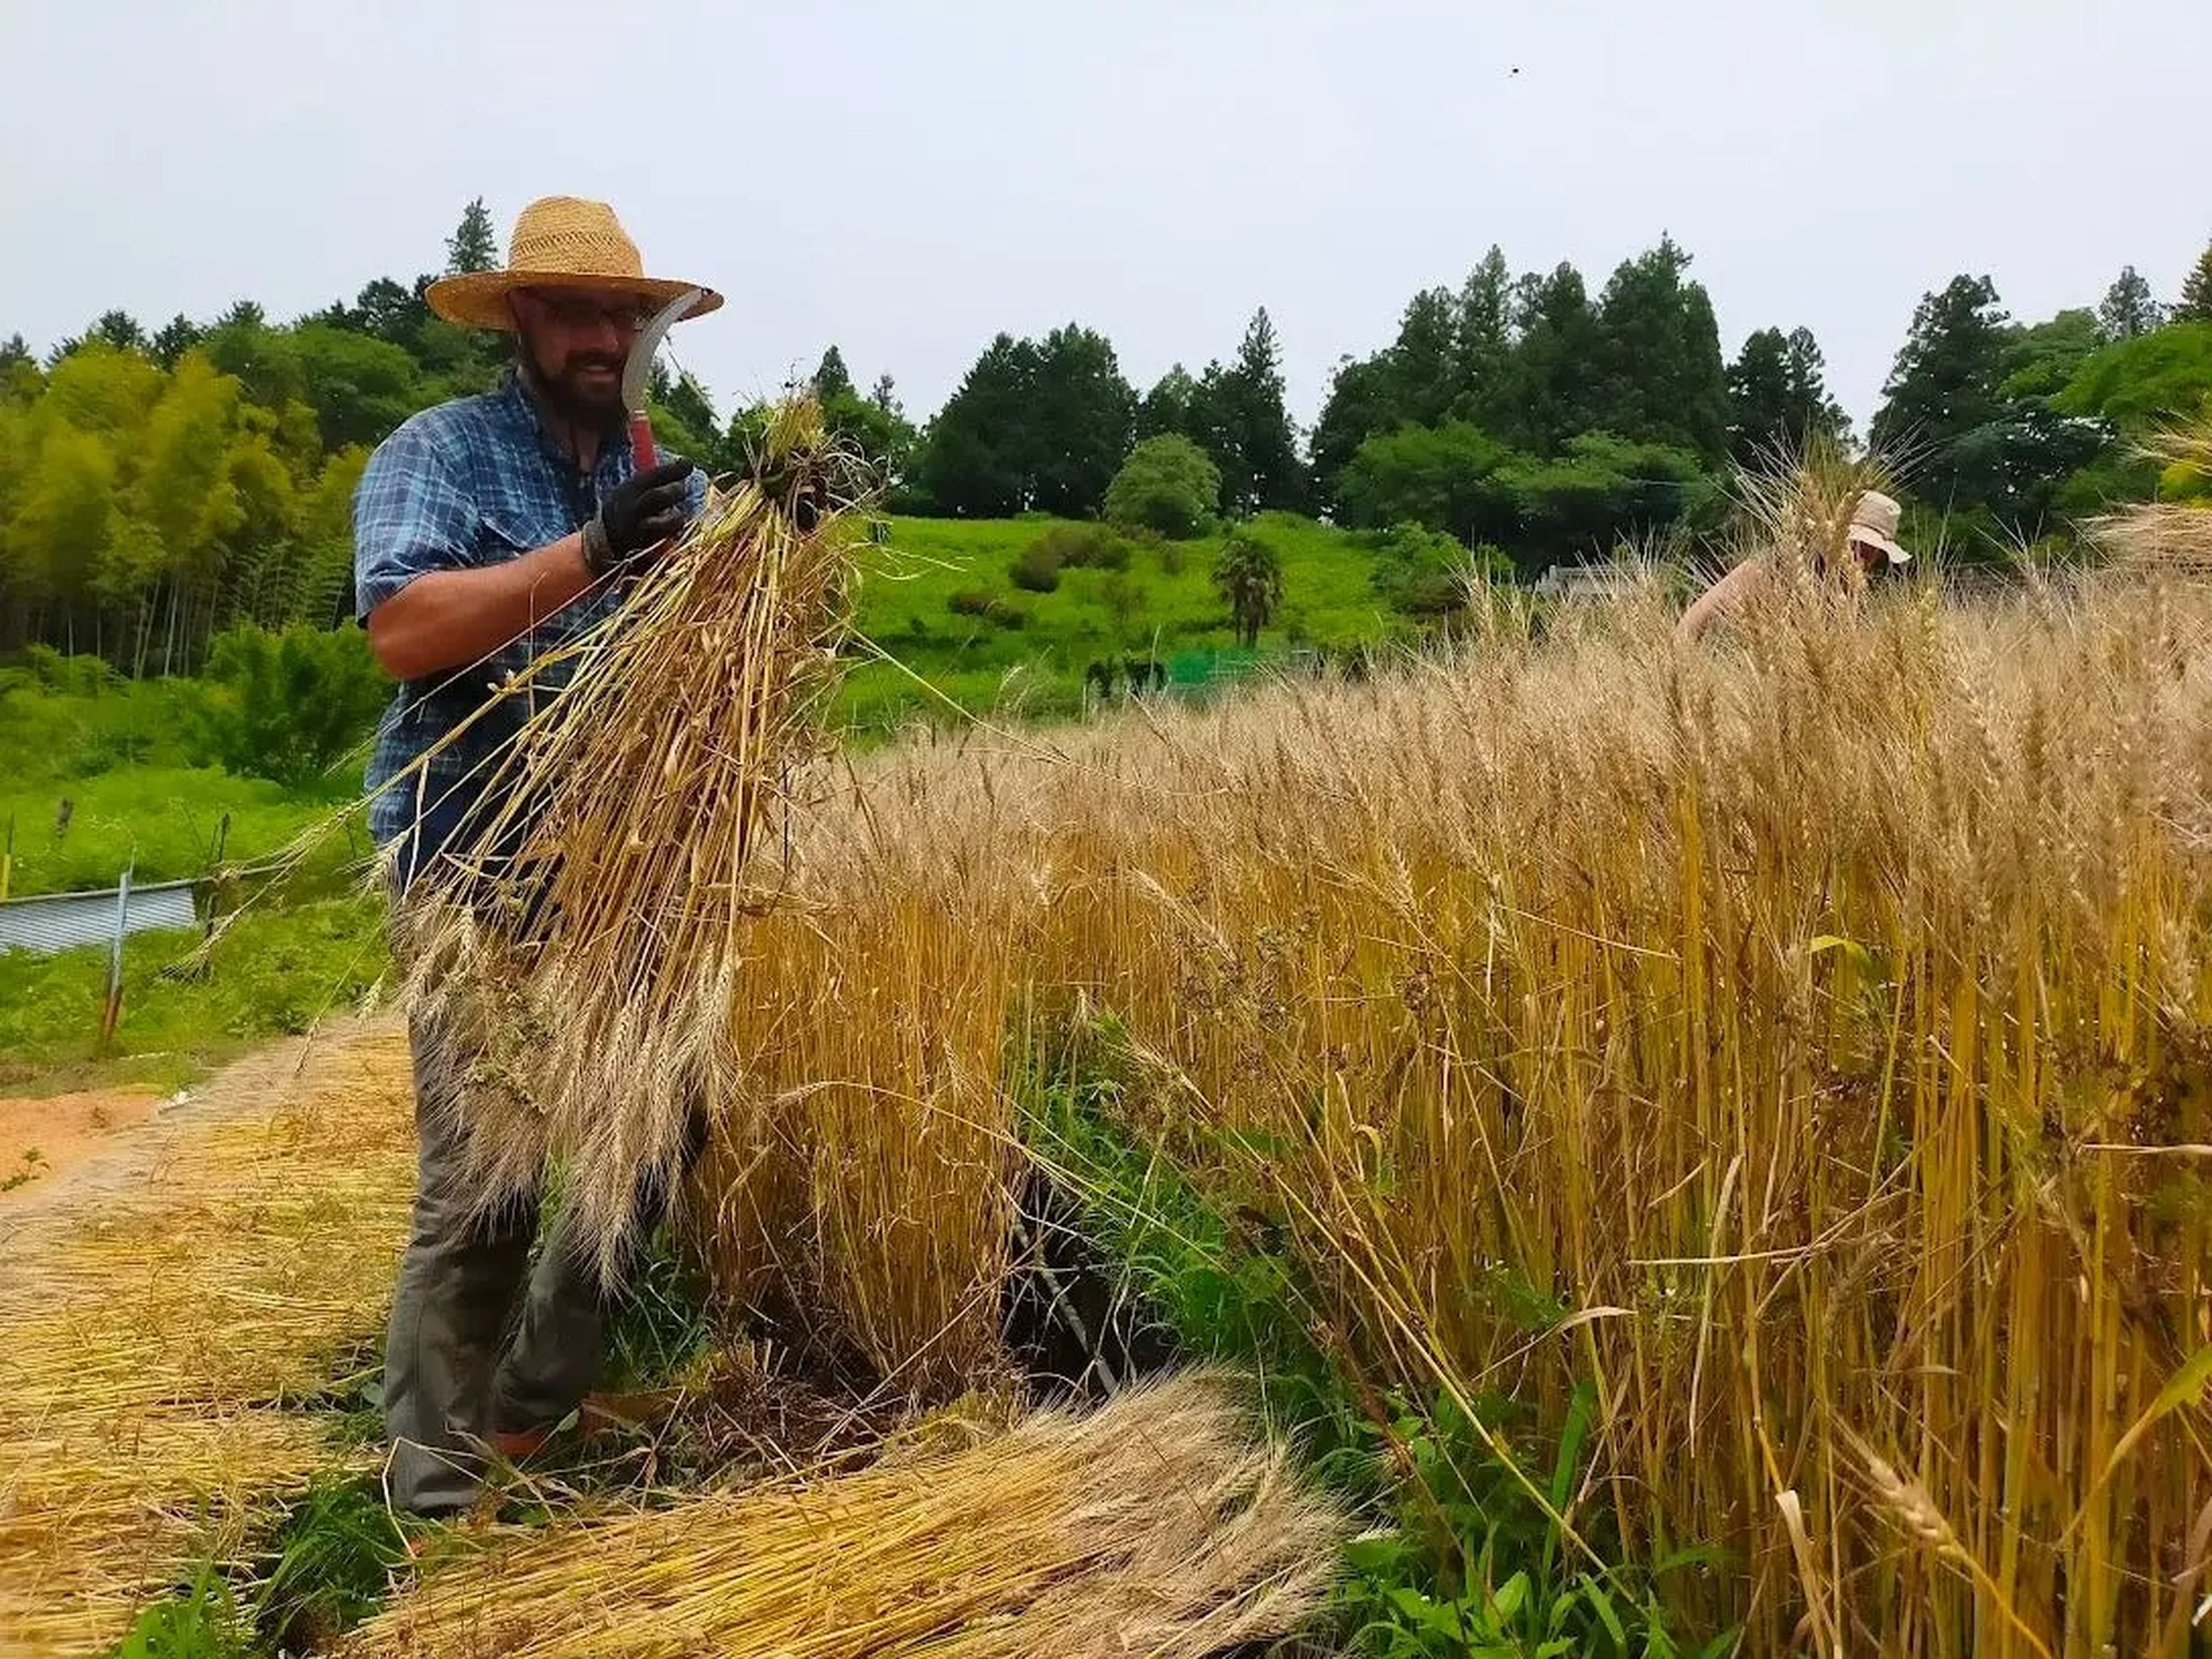 Byron Nagy harvesting wheat